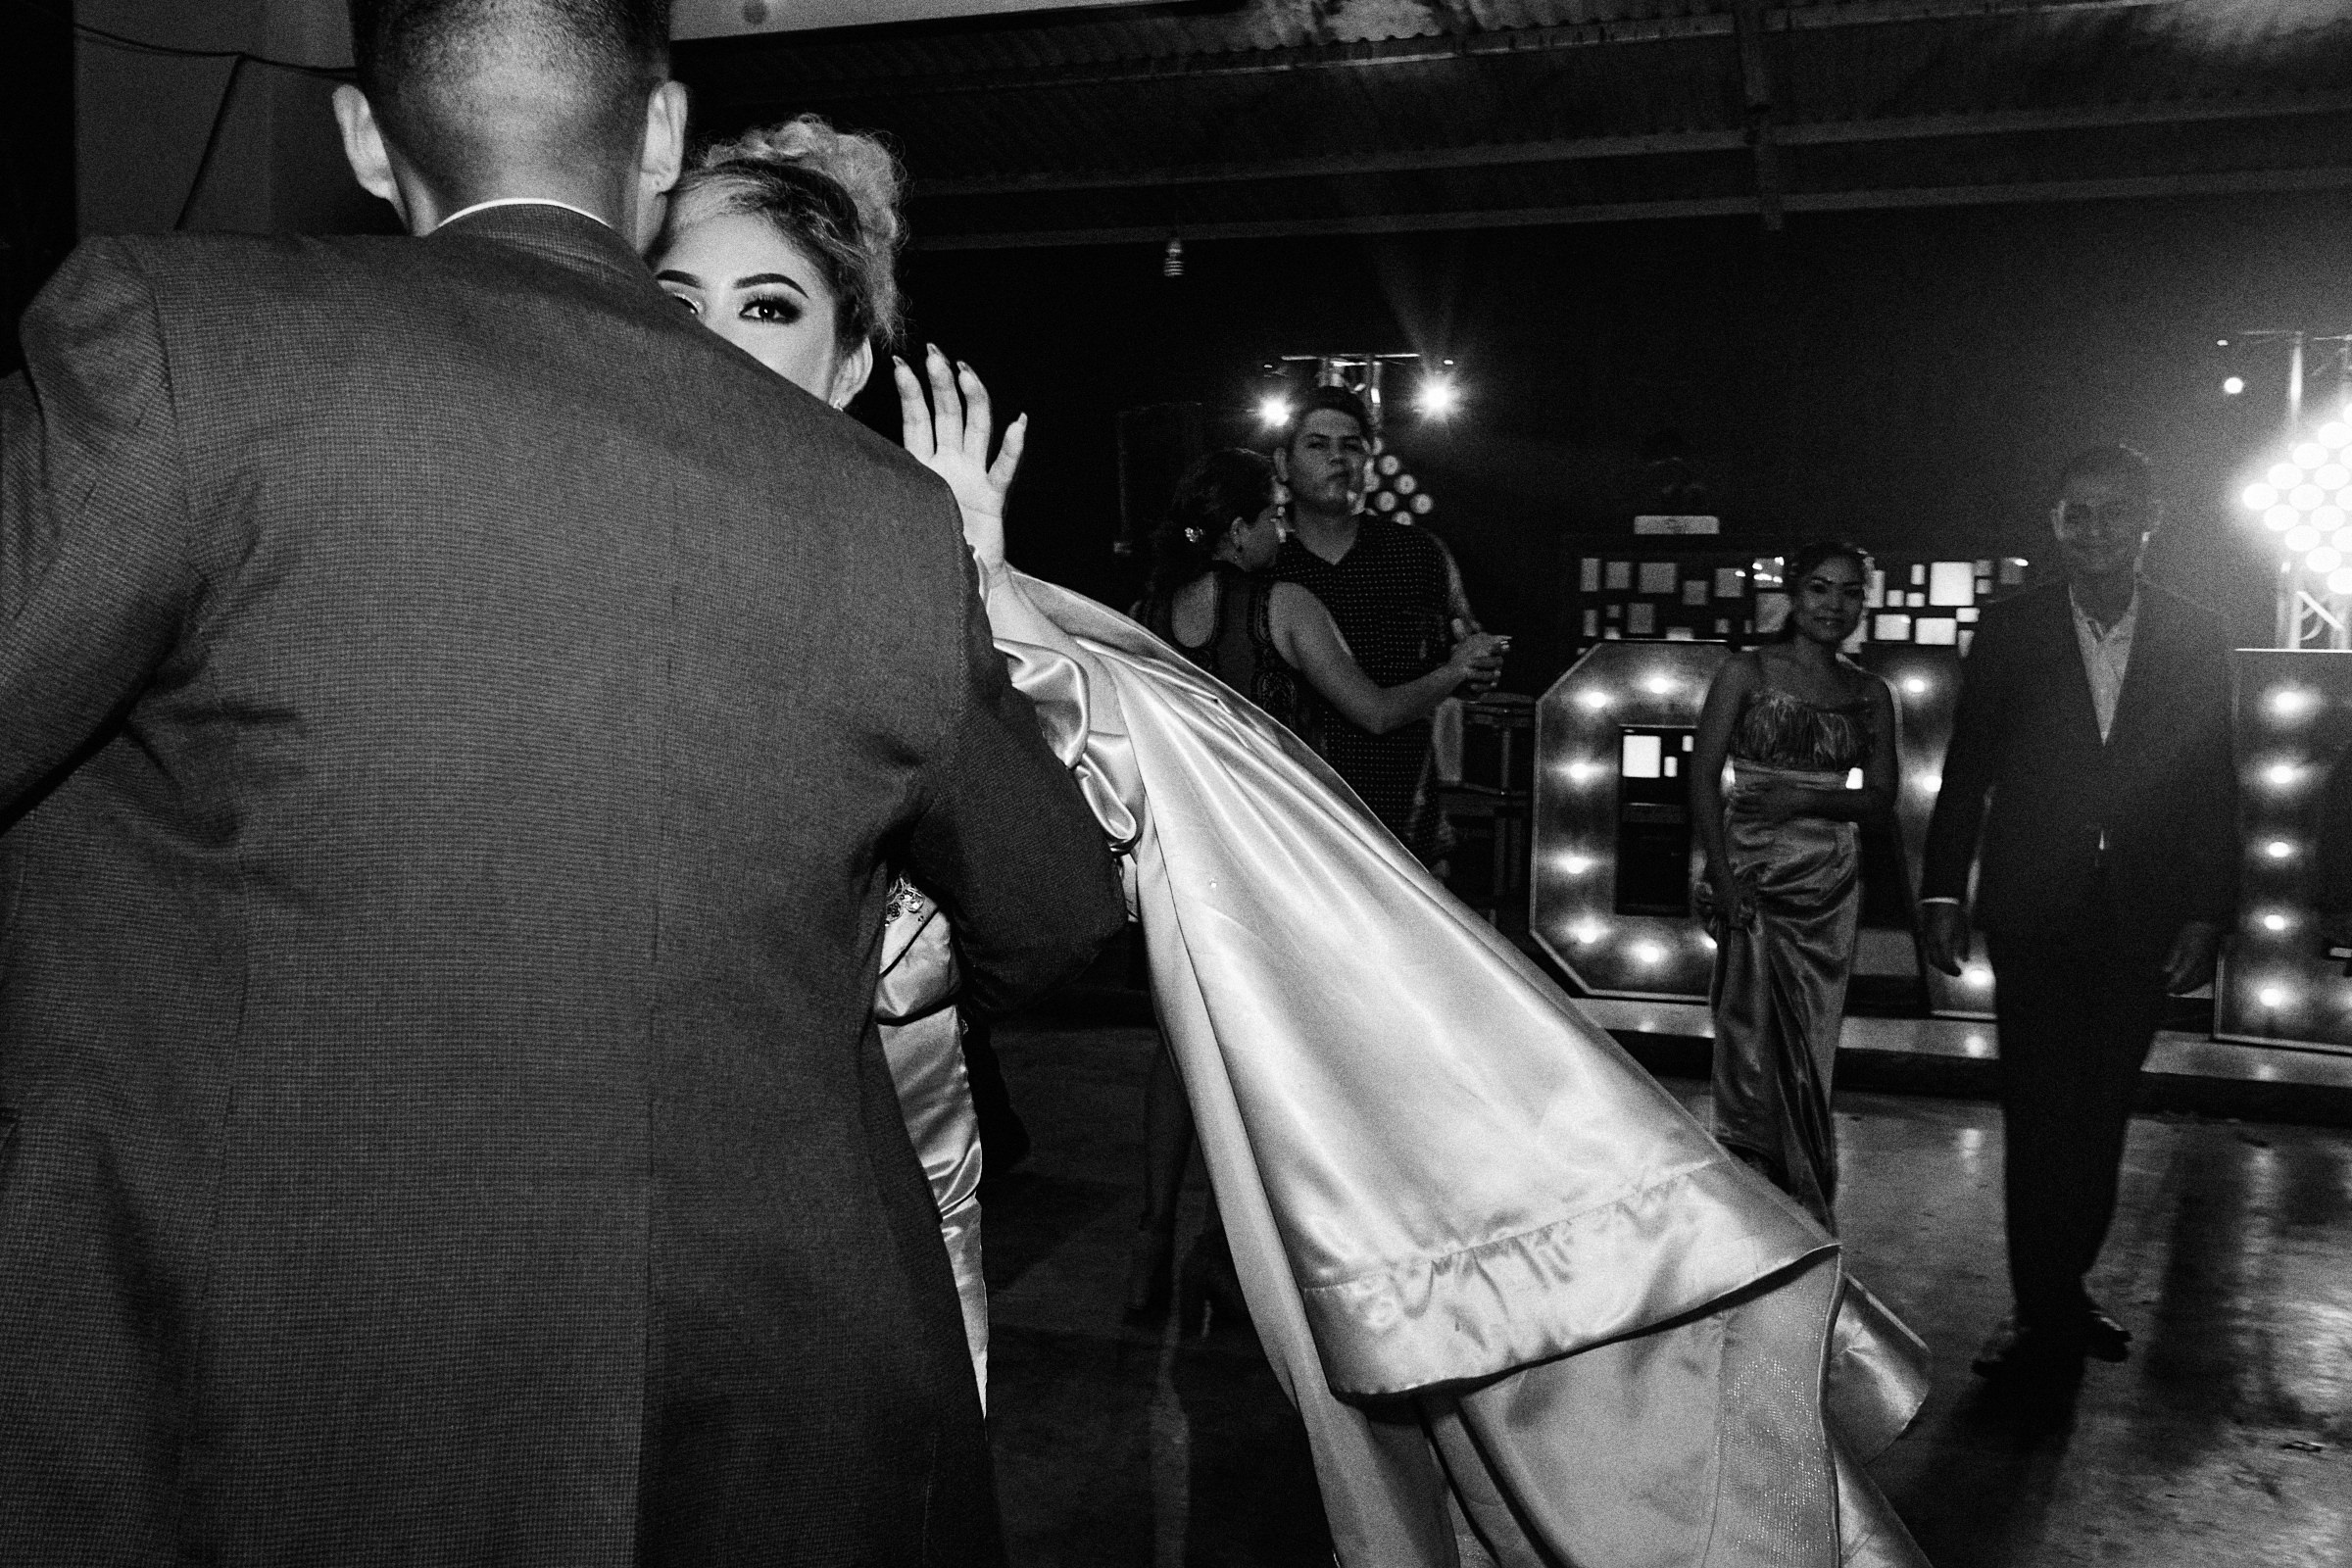 Bridesmaid Looks Straight At The Camera During Wedding Reception Dancing